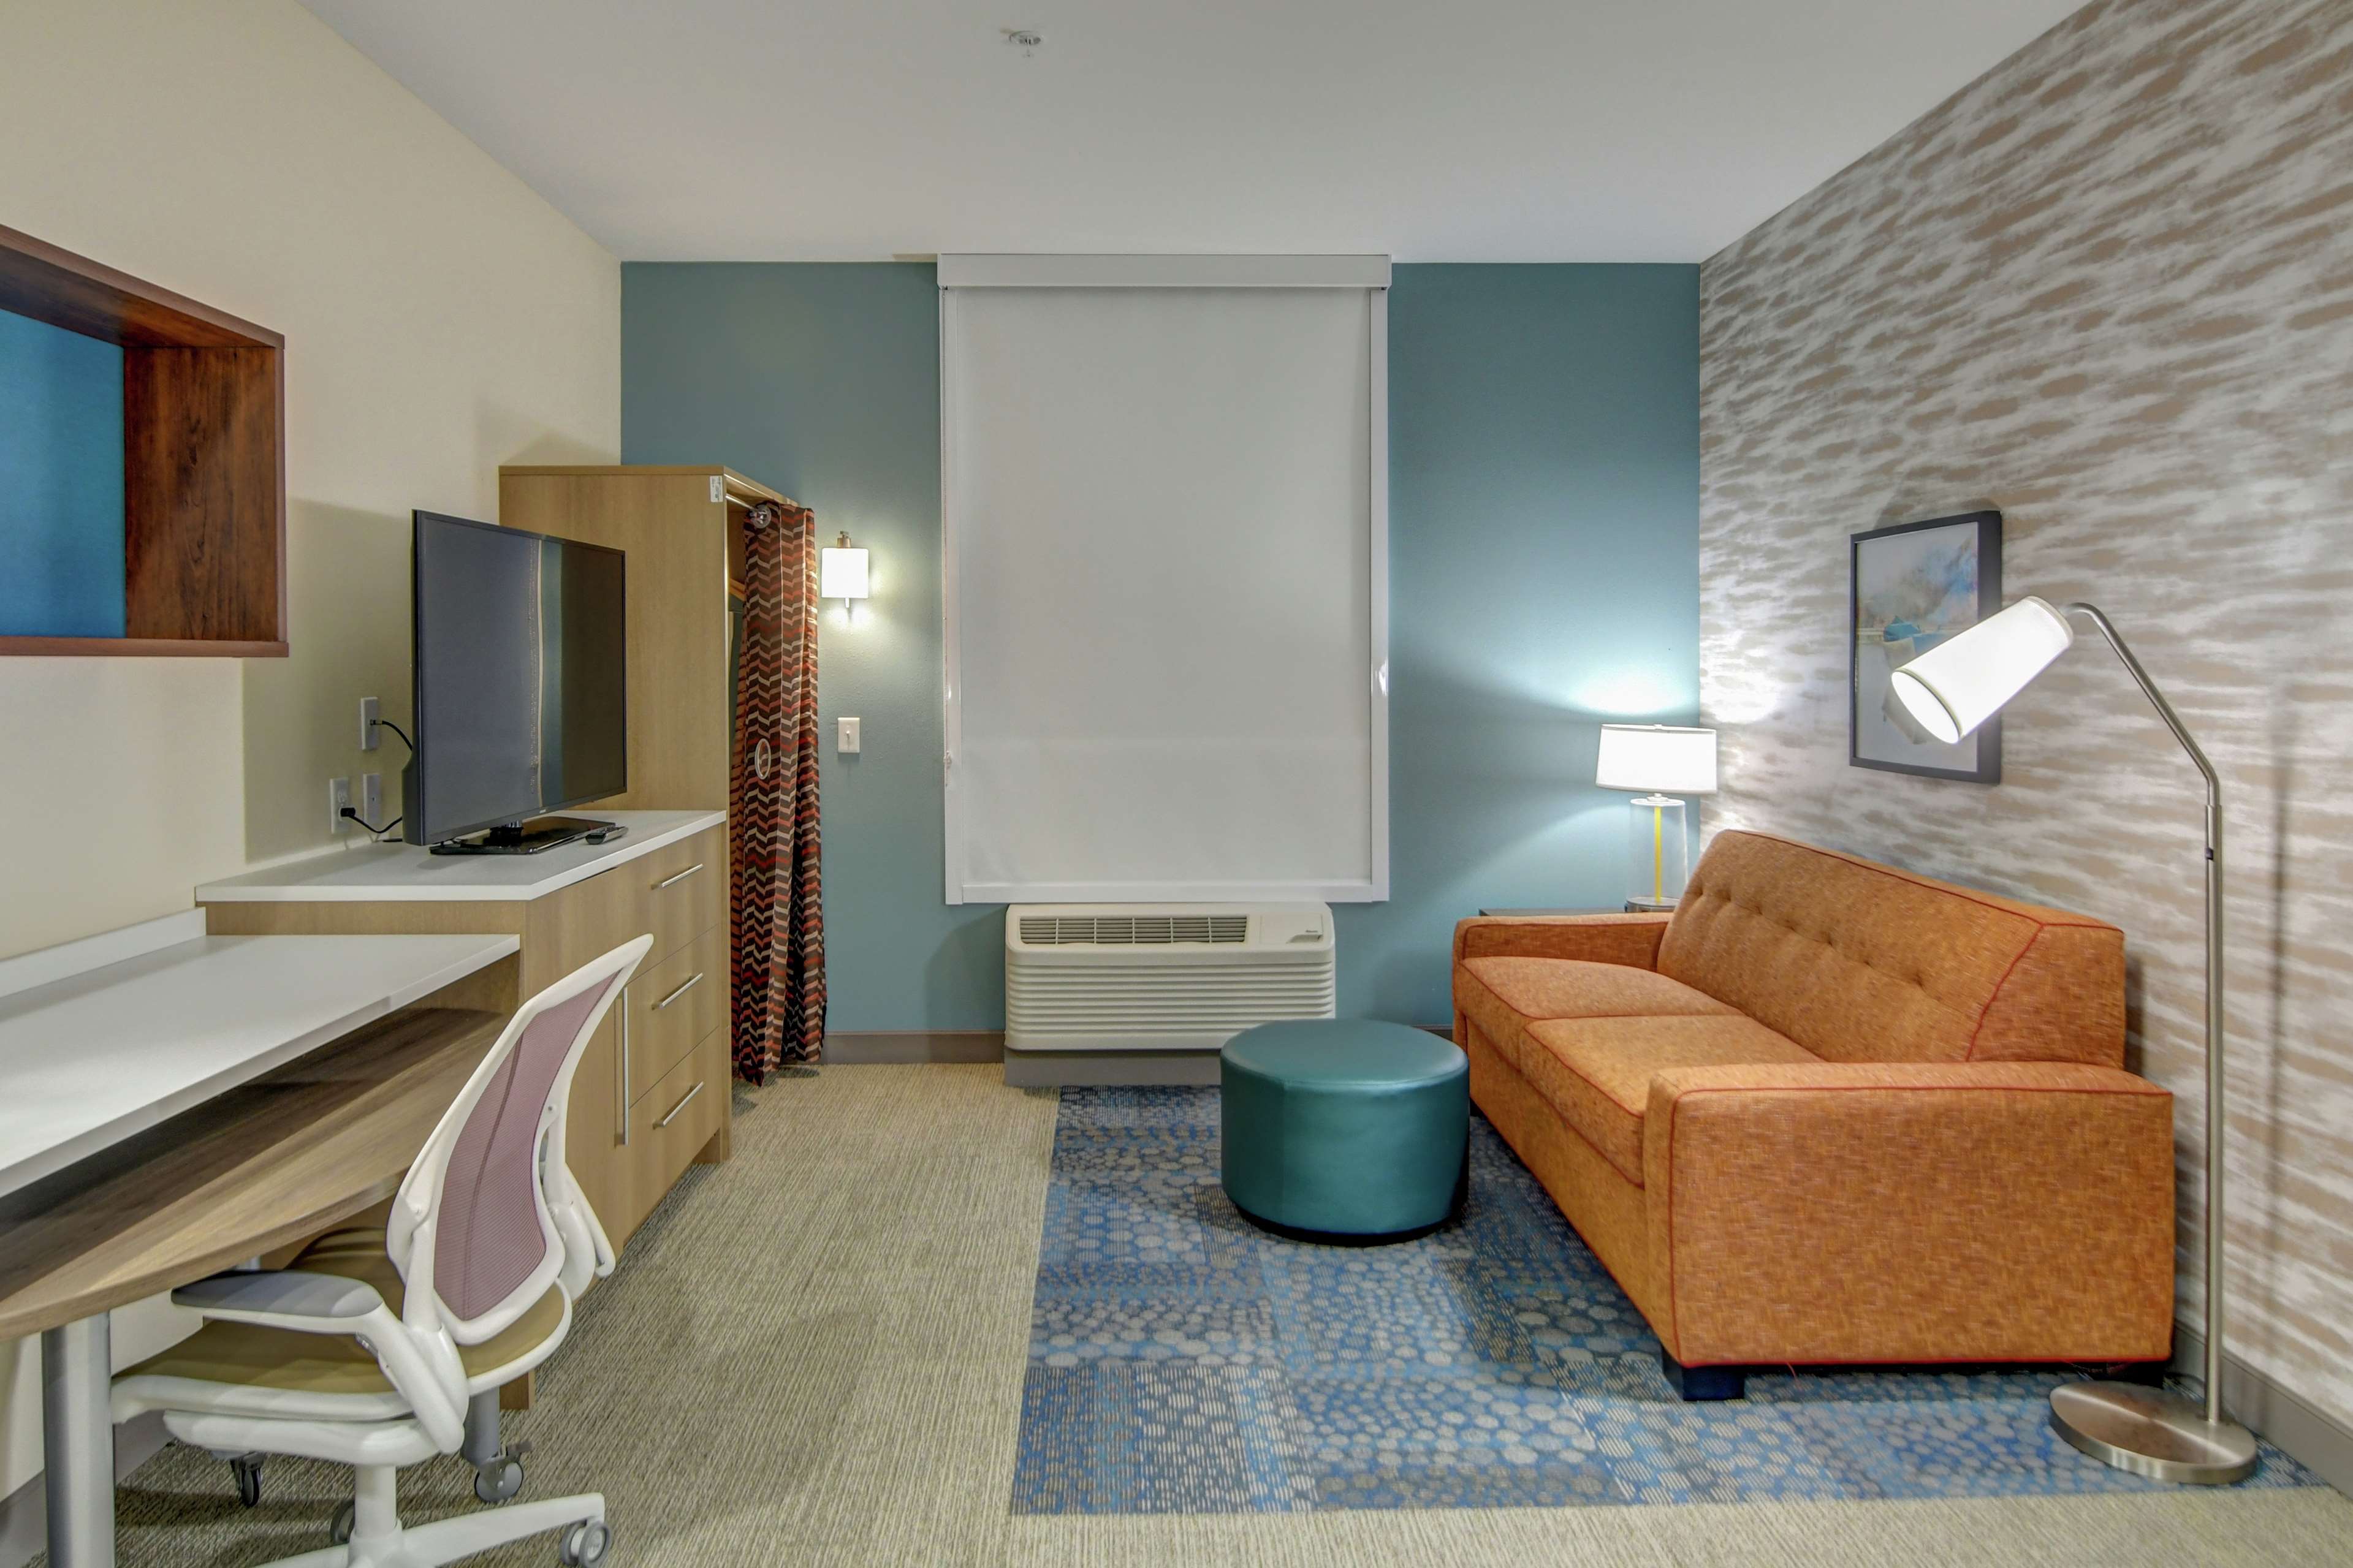 Home2 Suites by Hilton Foley Photo